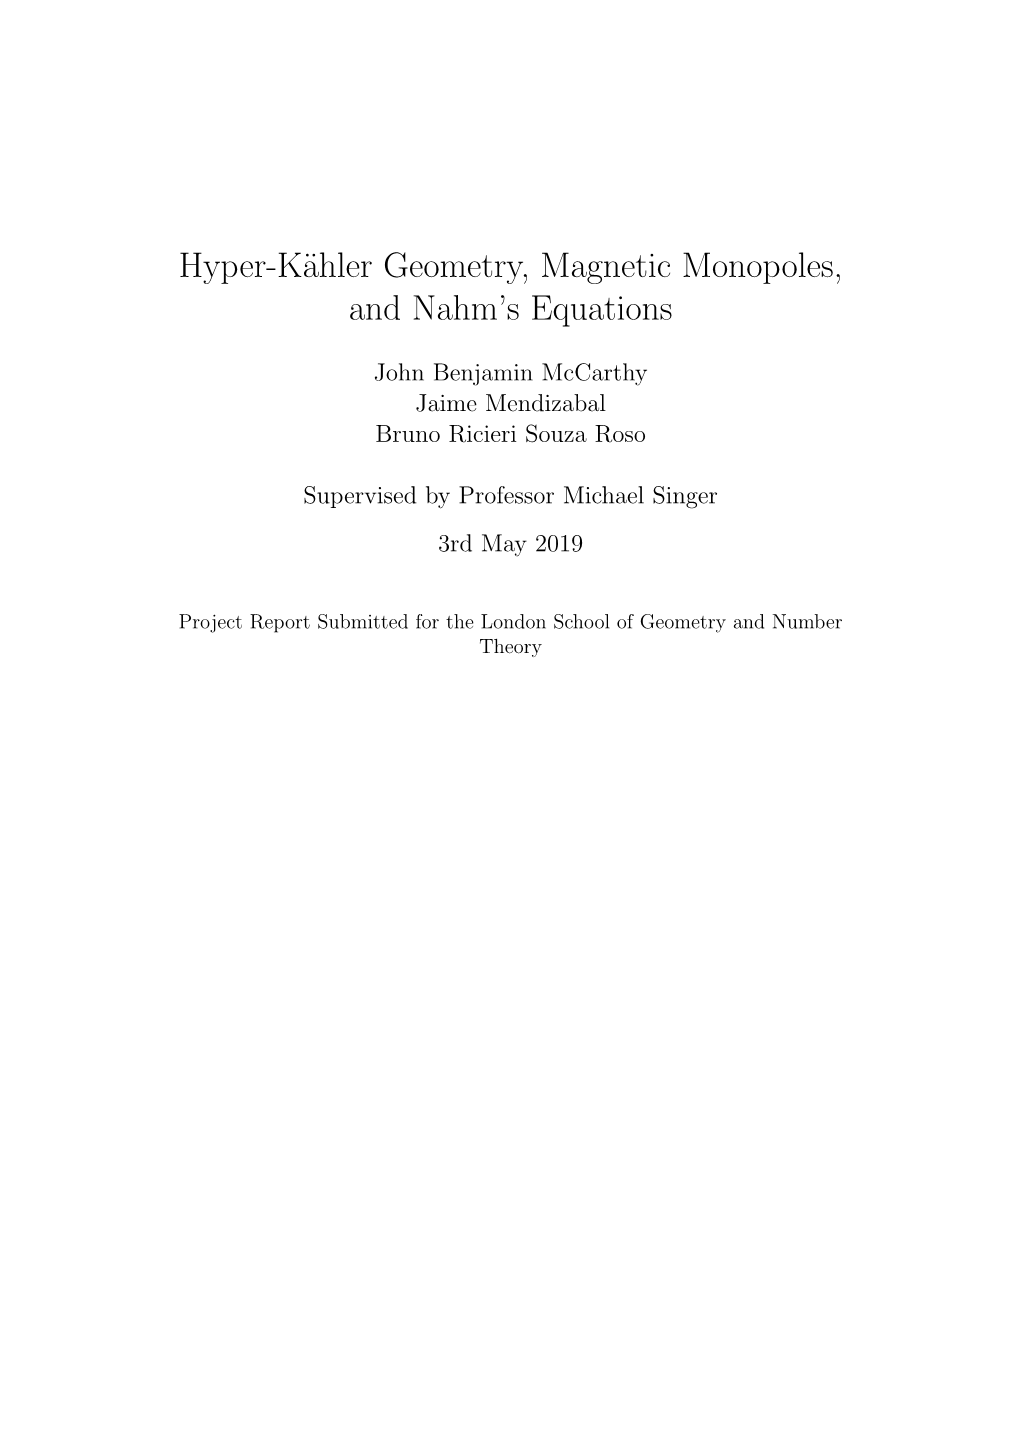 Hyper-Kähler Geometry, Magnetic Monopoles, and Nahm's Equations